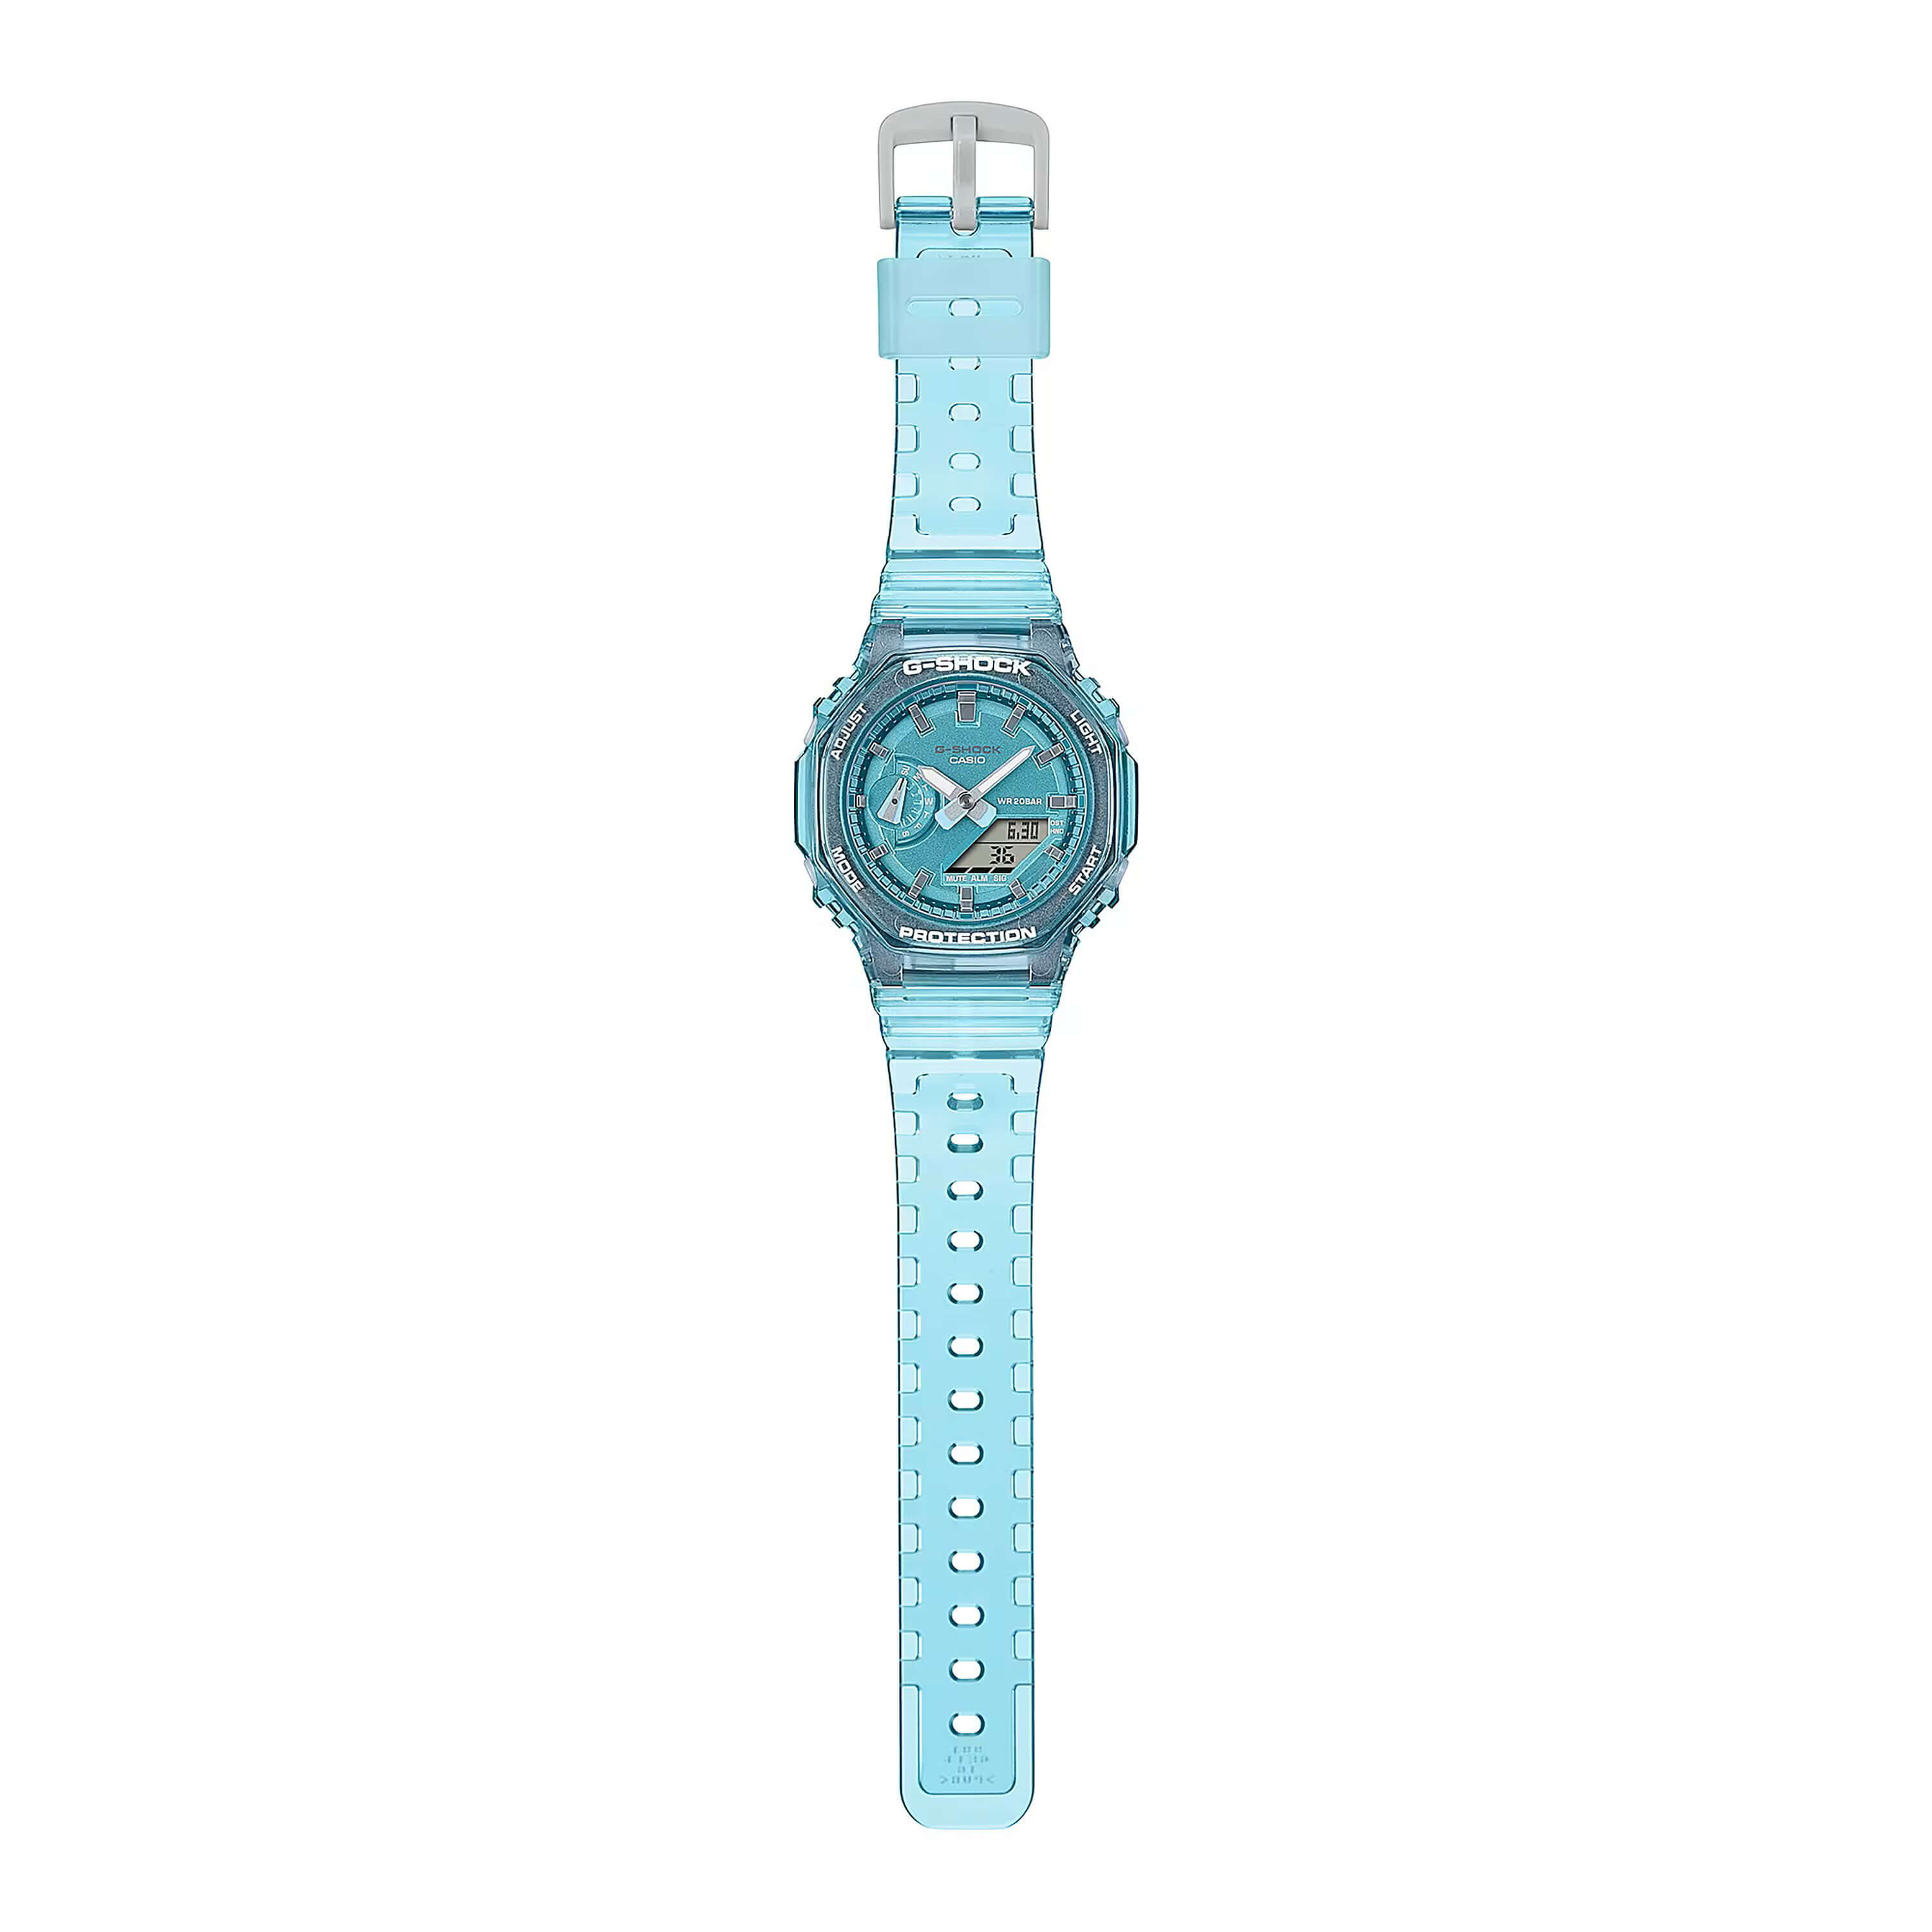 G-Shock Analog-Digital Watch Blue Metallic Case and Dial, 46mm